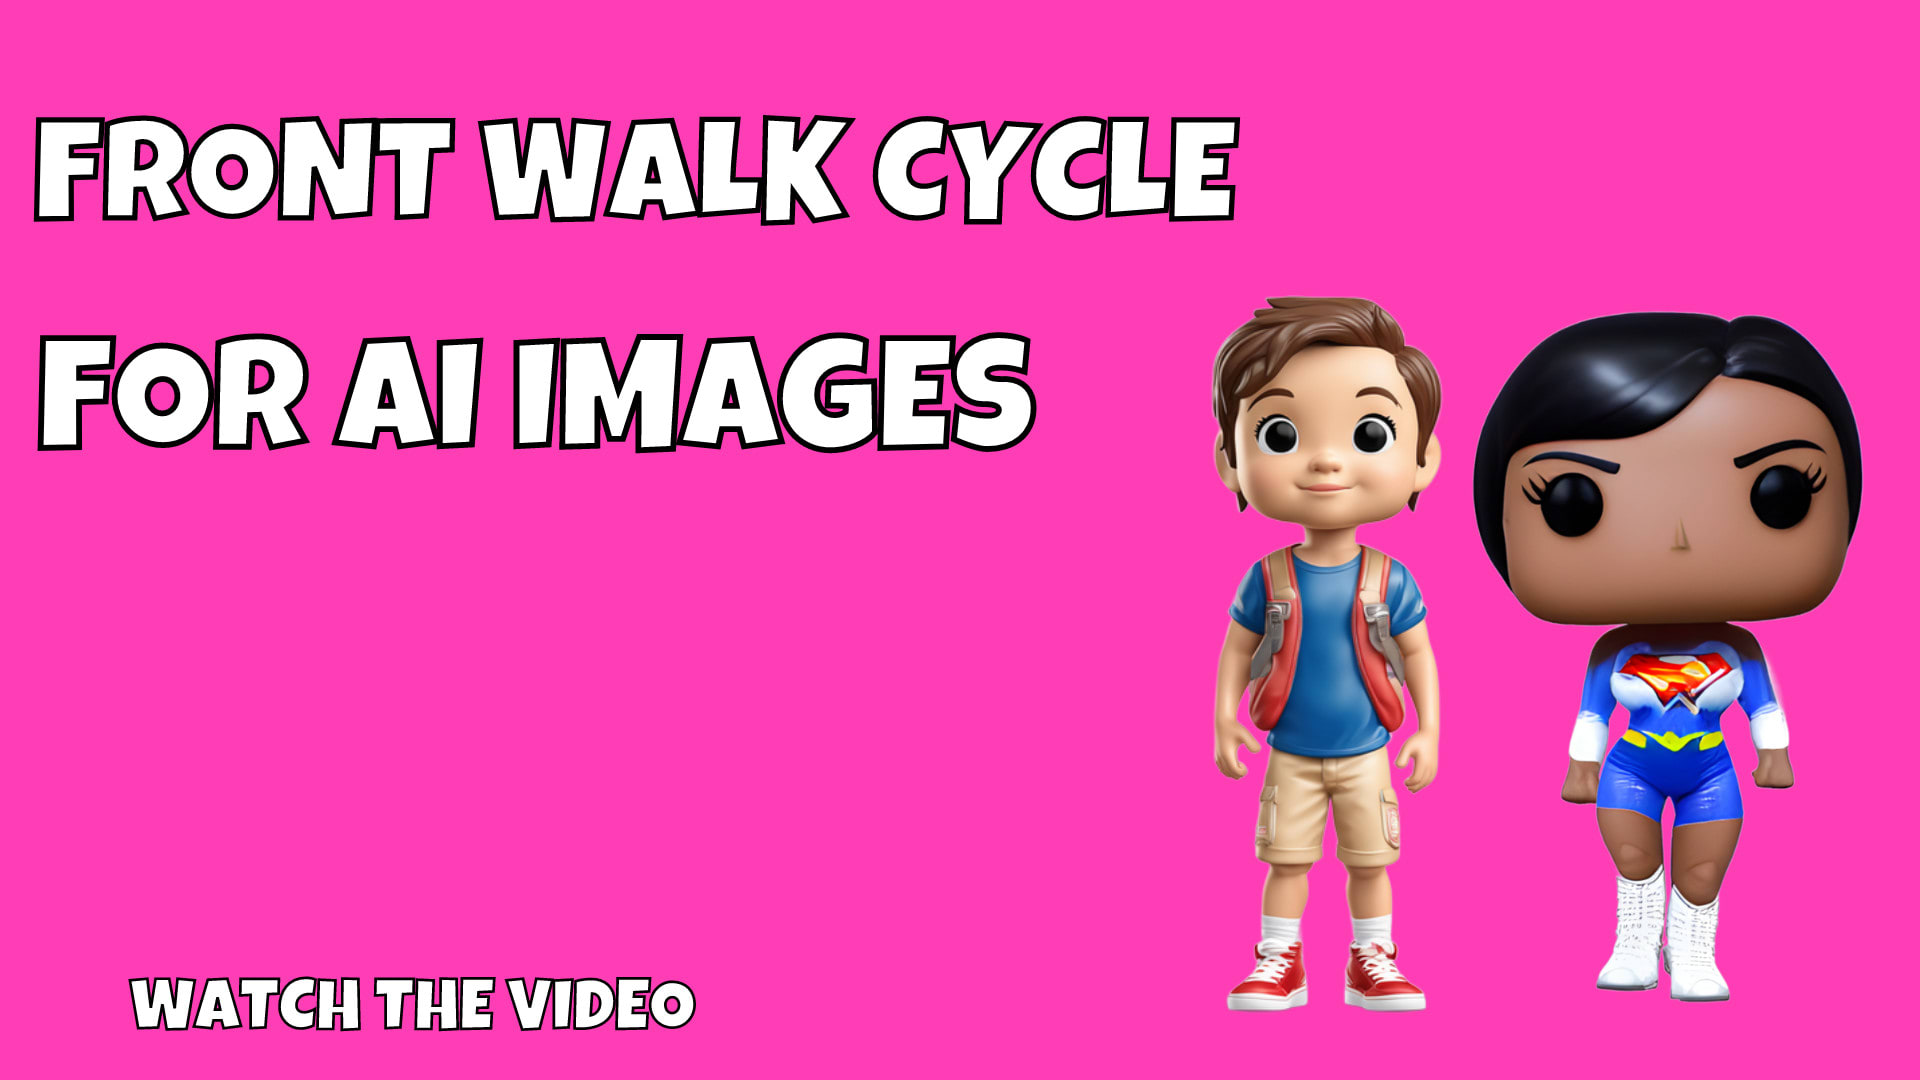 1. Walk cycle (